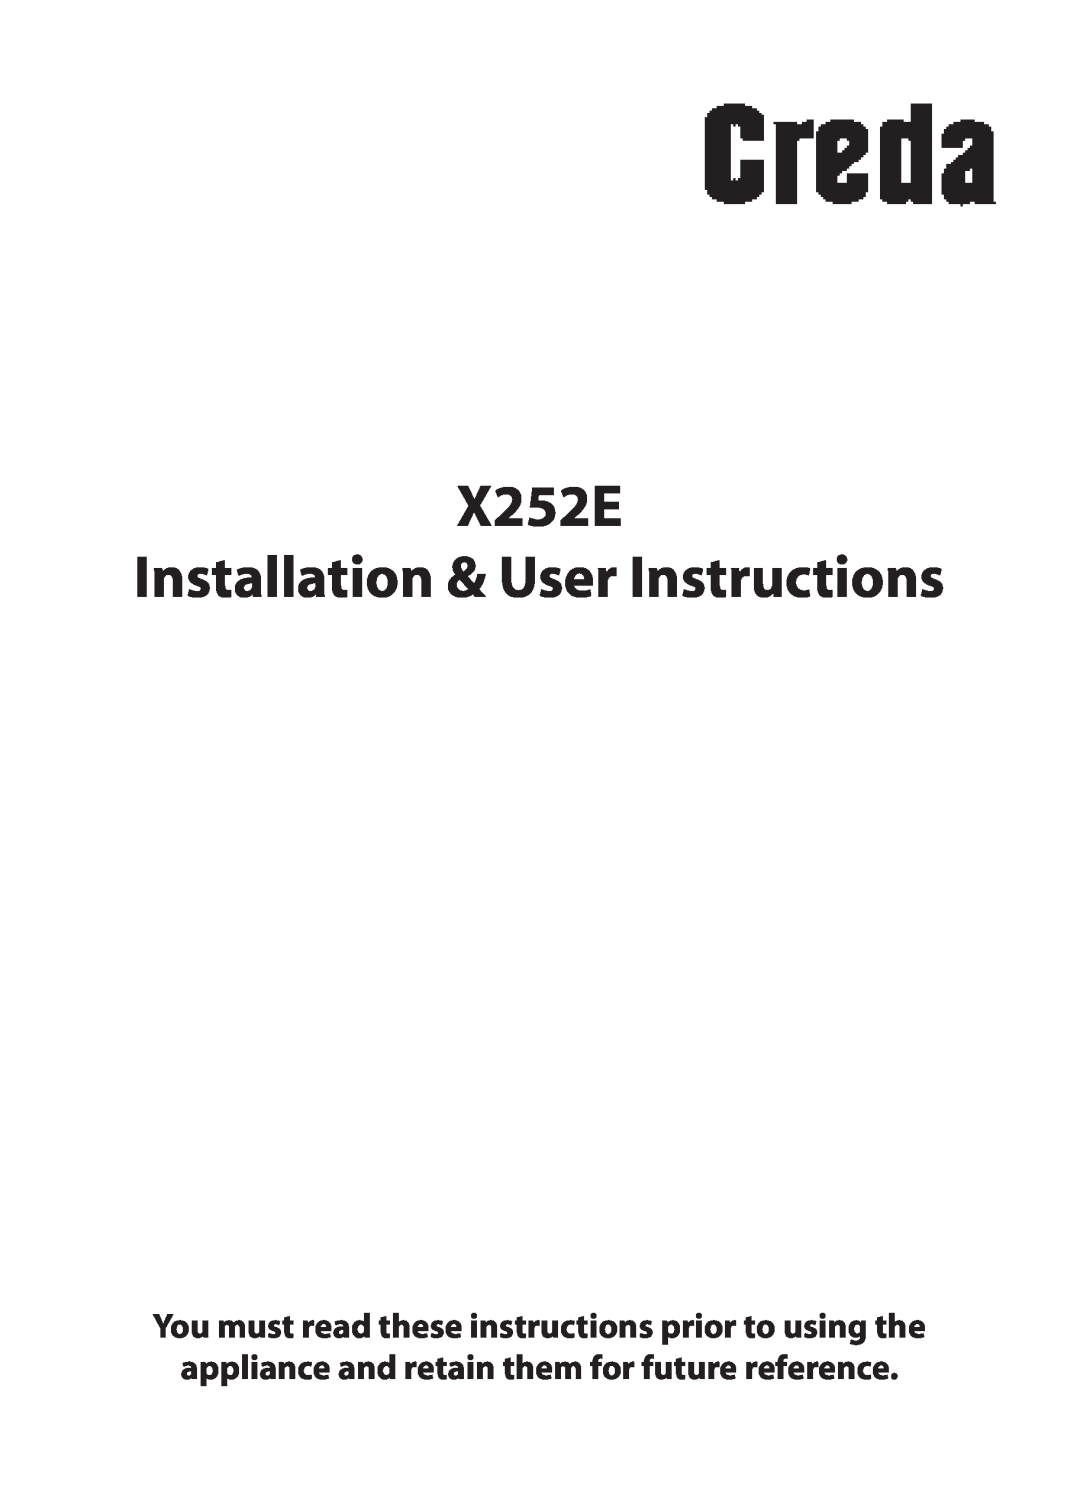 Creda manual X252E Installation & User Instructions 